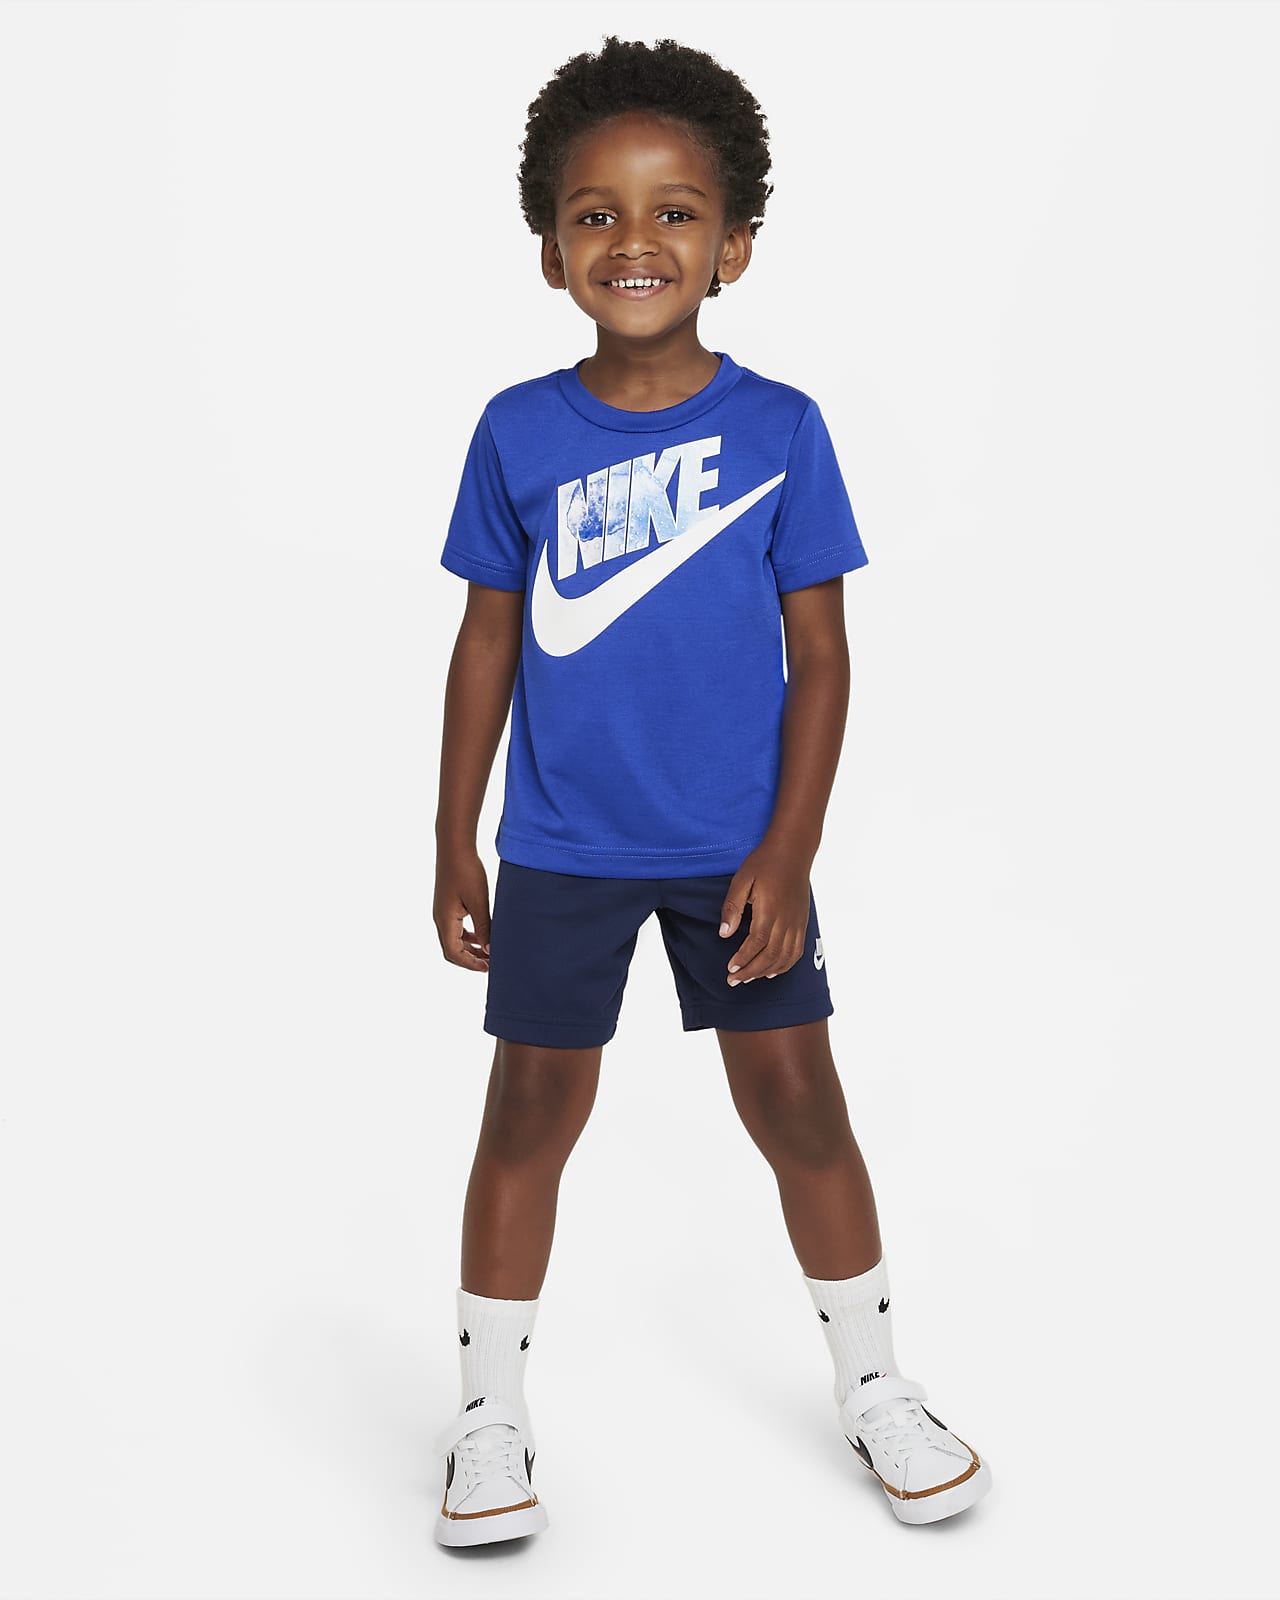 Nike Toddler T-Shirt and Shorts Set